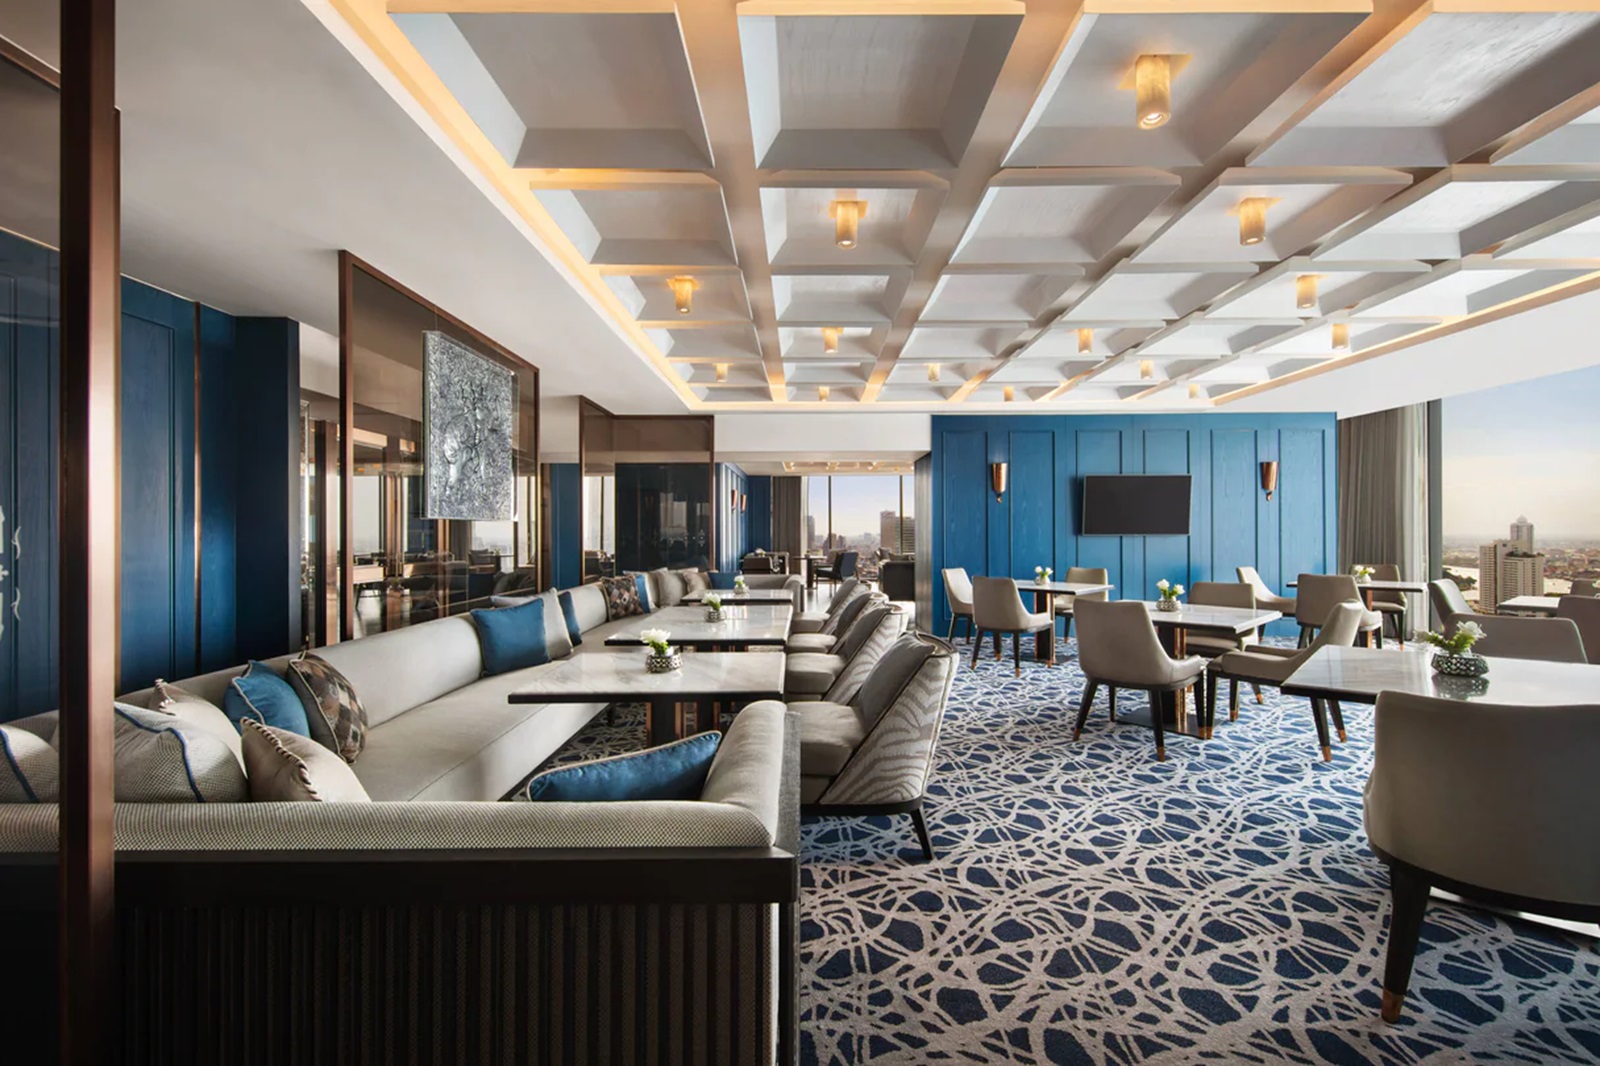 Bangkok Marriott Hotel The Surawongse Executive Club Lounge Overview